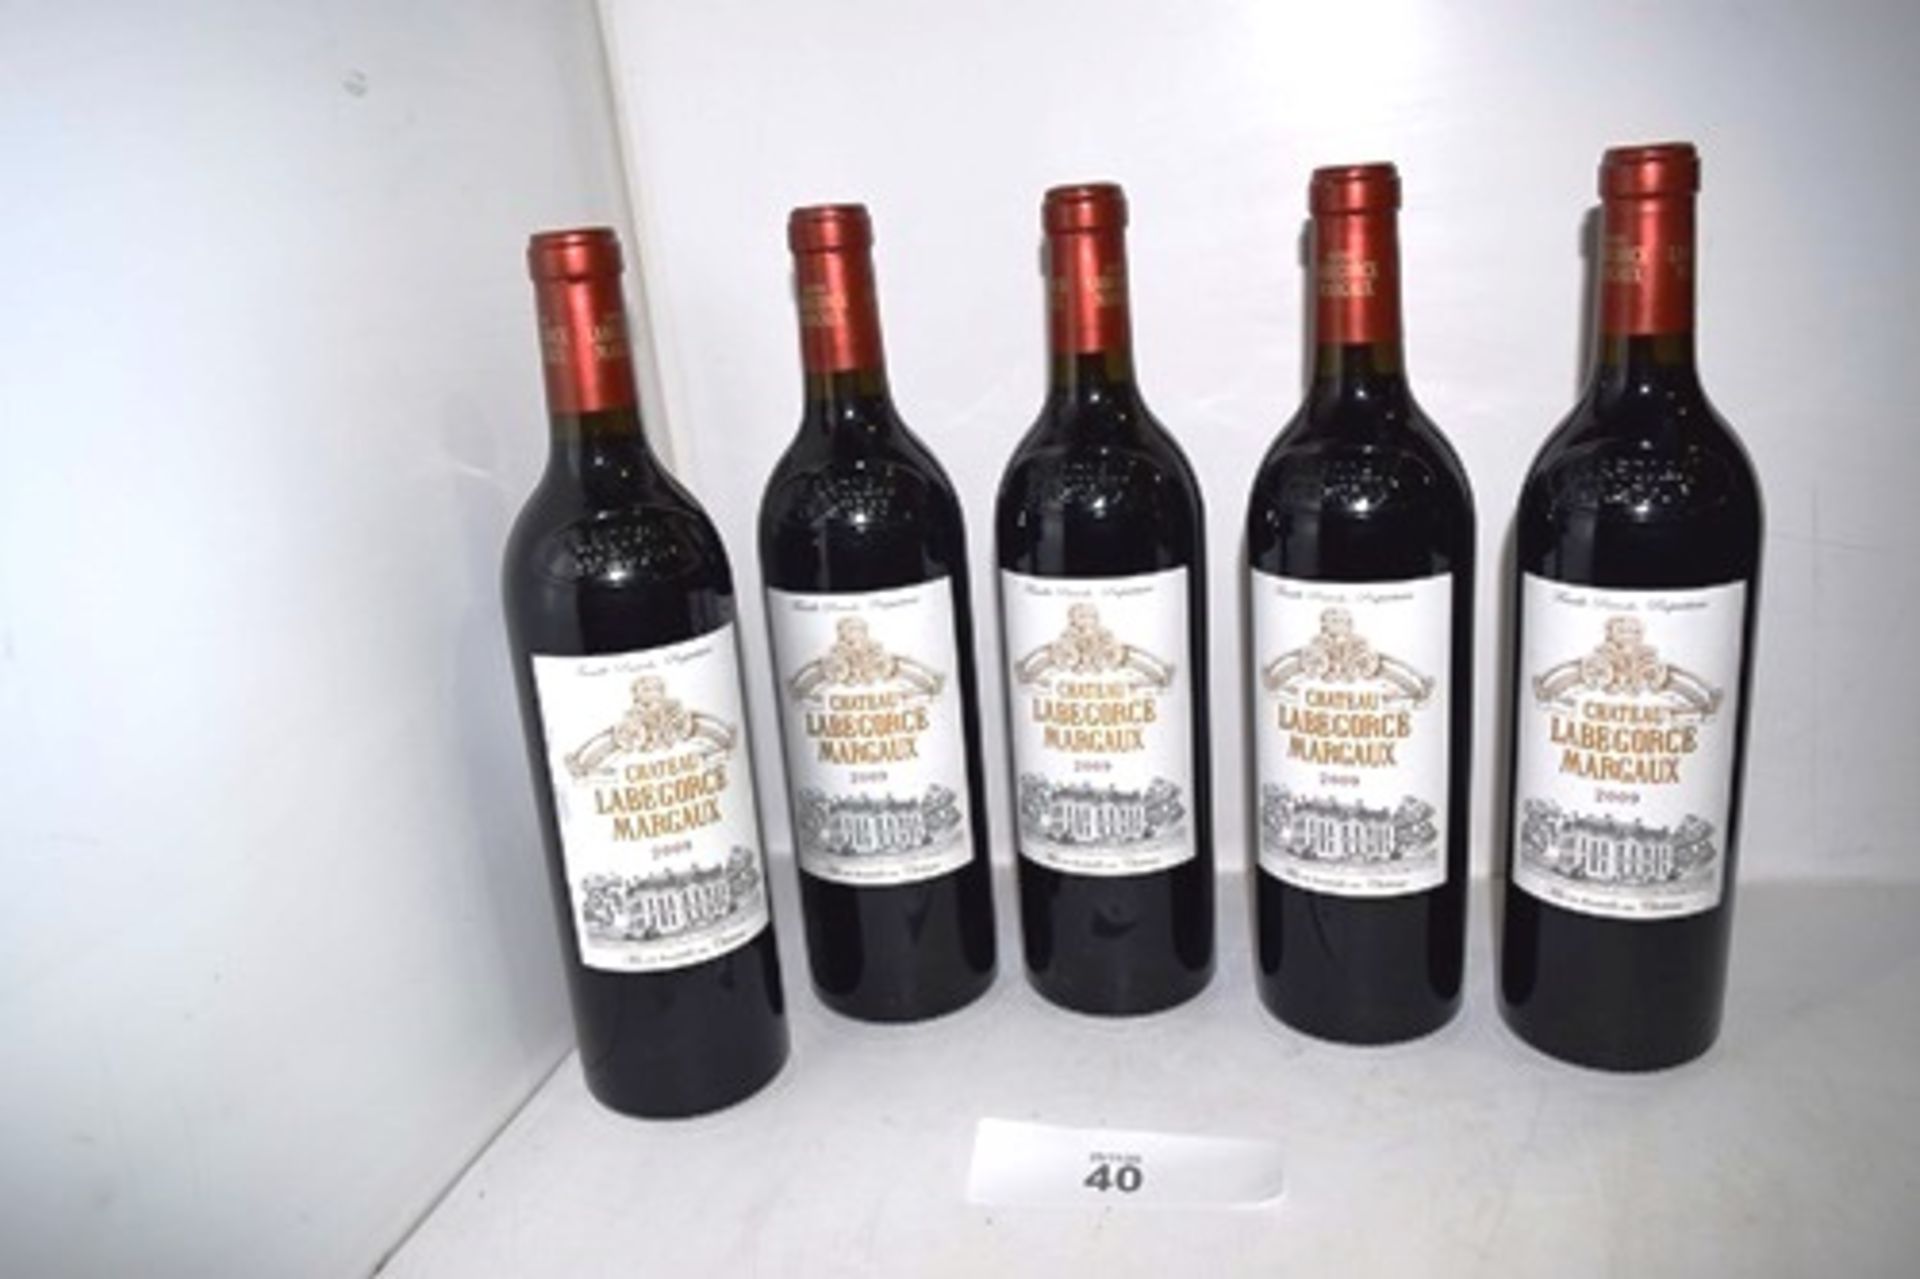 5 x bottles of Chateau Labegorce Margaux 2009 (5) (Cab1)